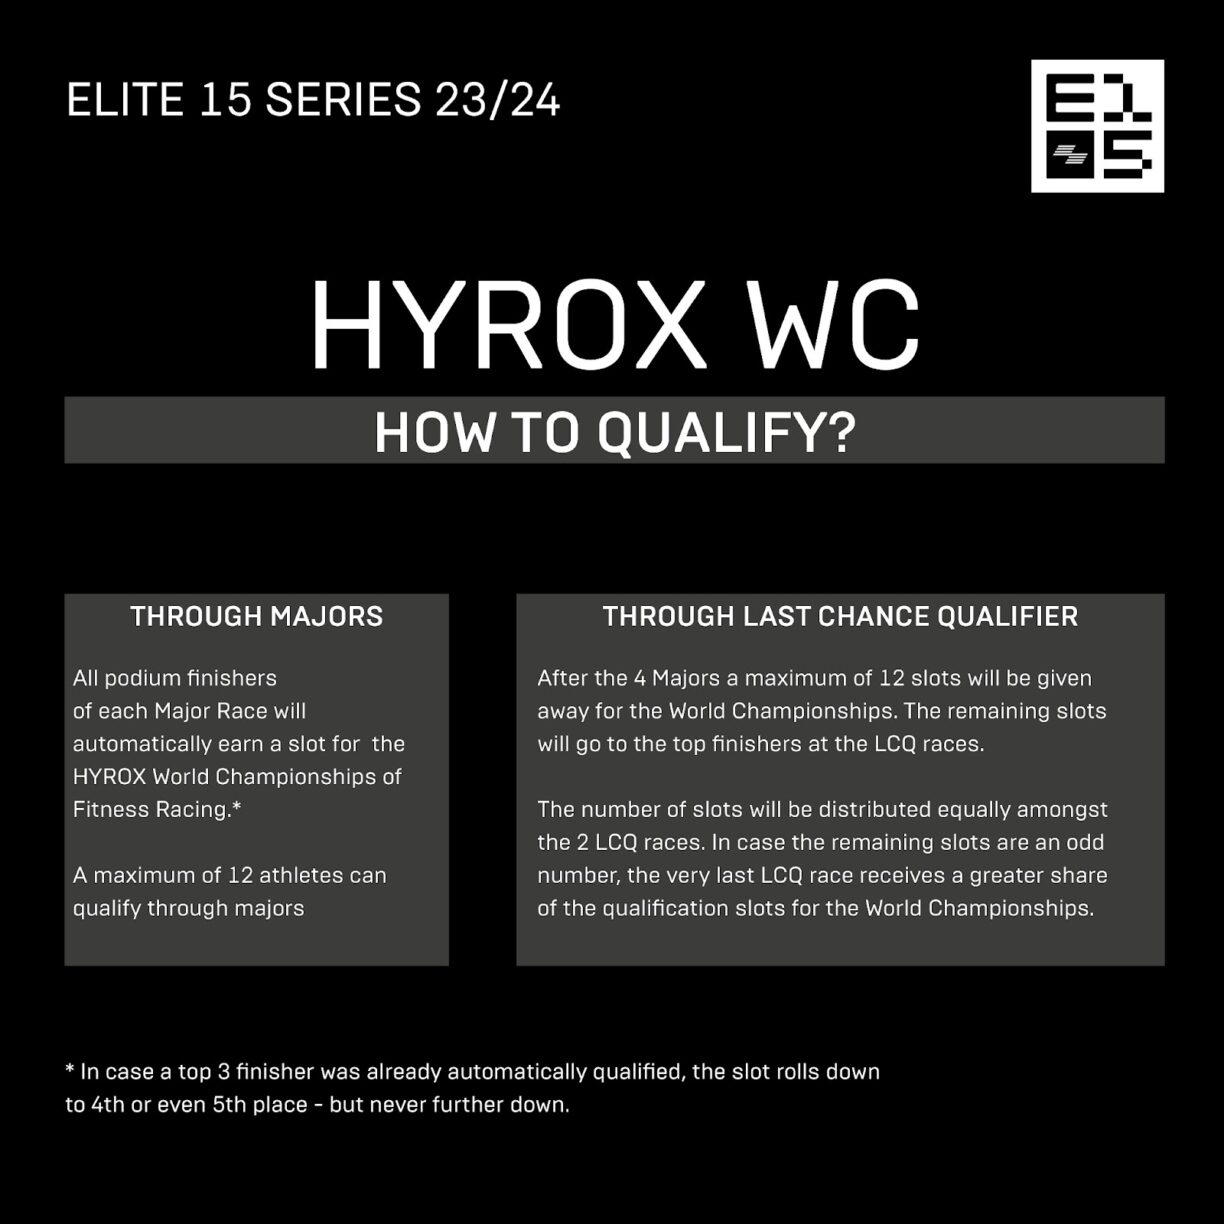 Hyrox how to qualify elite 15